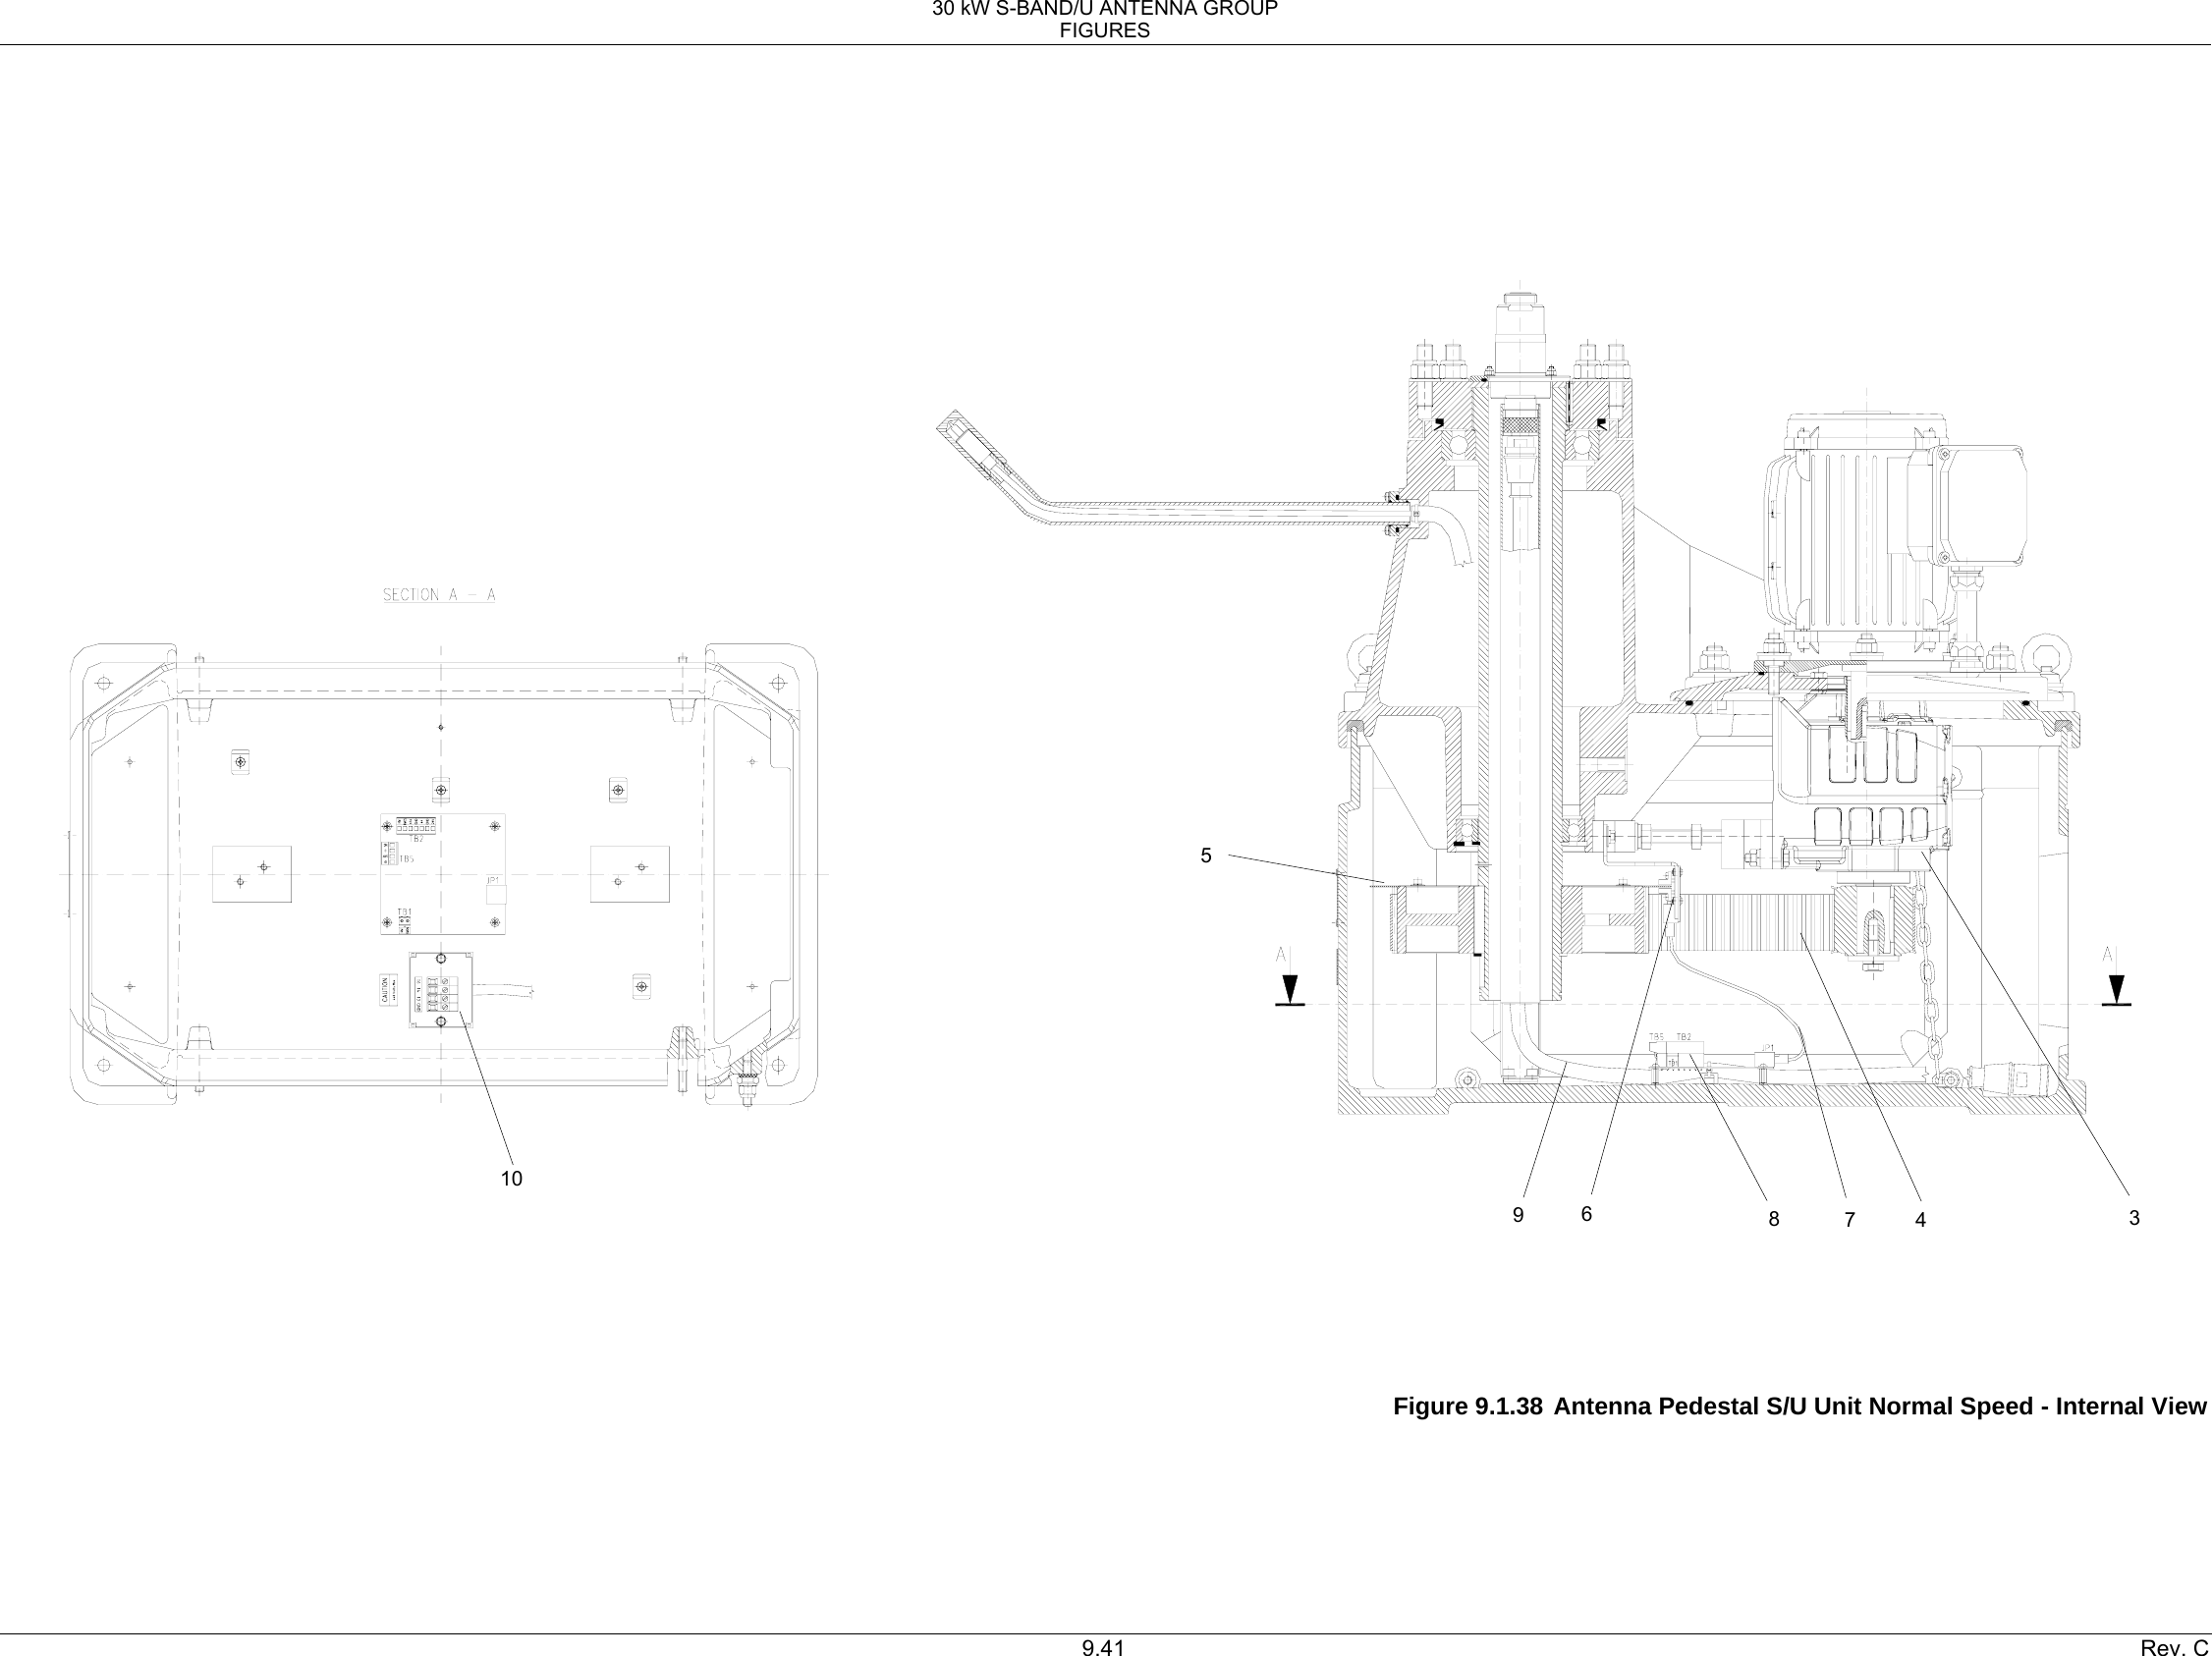 30 kW S-BAND/U ANTENNA GROUP FIGURES 9.41  Rev. C                                                          Figure 9.1.38 Antenna Pedestal S/U Unit Normal Speed - Internal View 3 8  4 9  7 5 6 10 